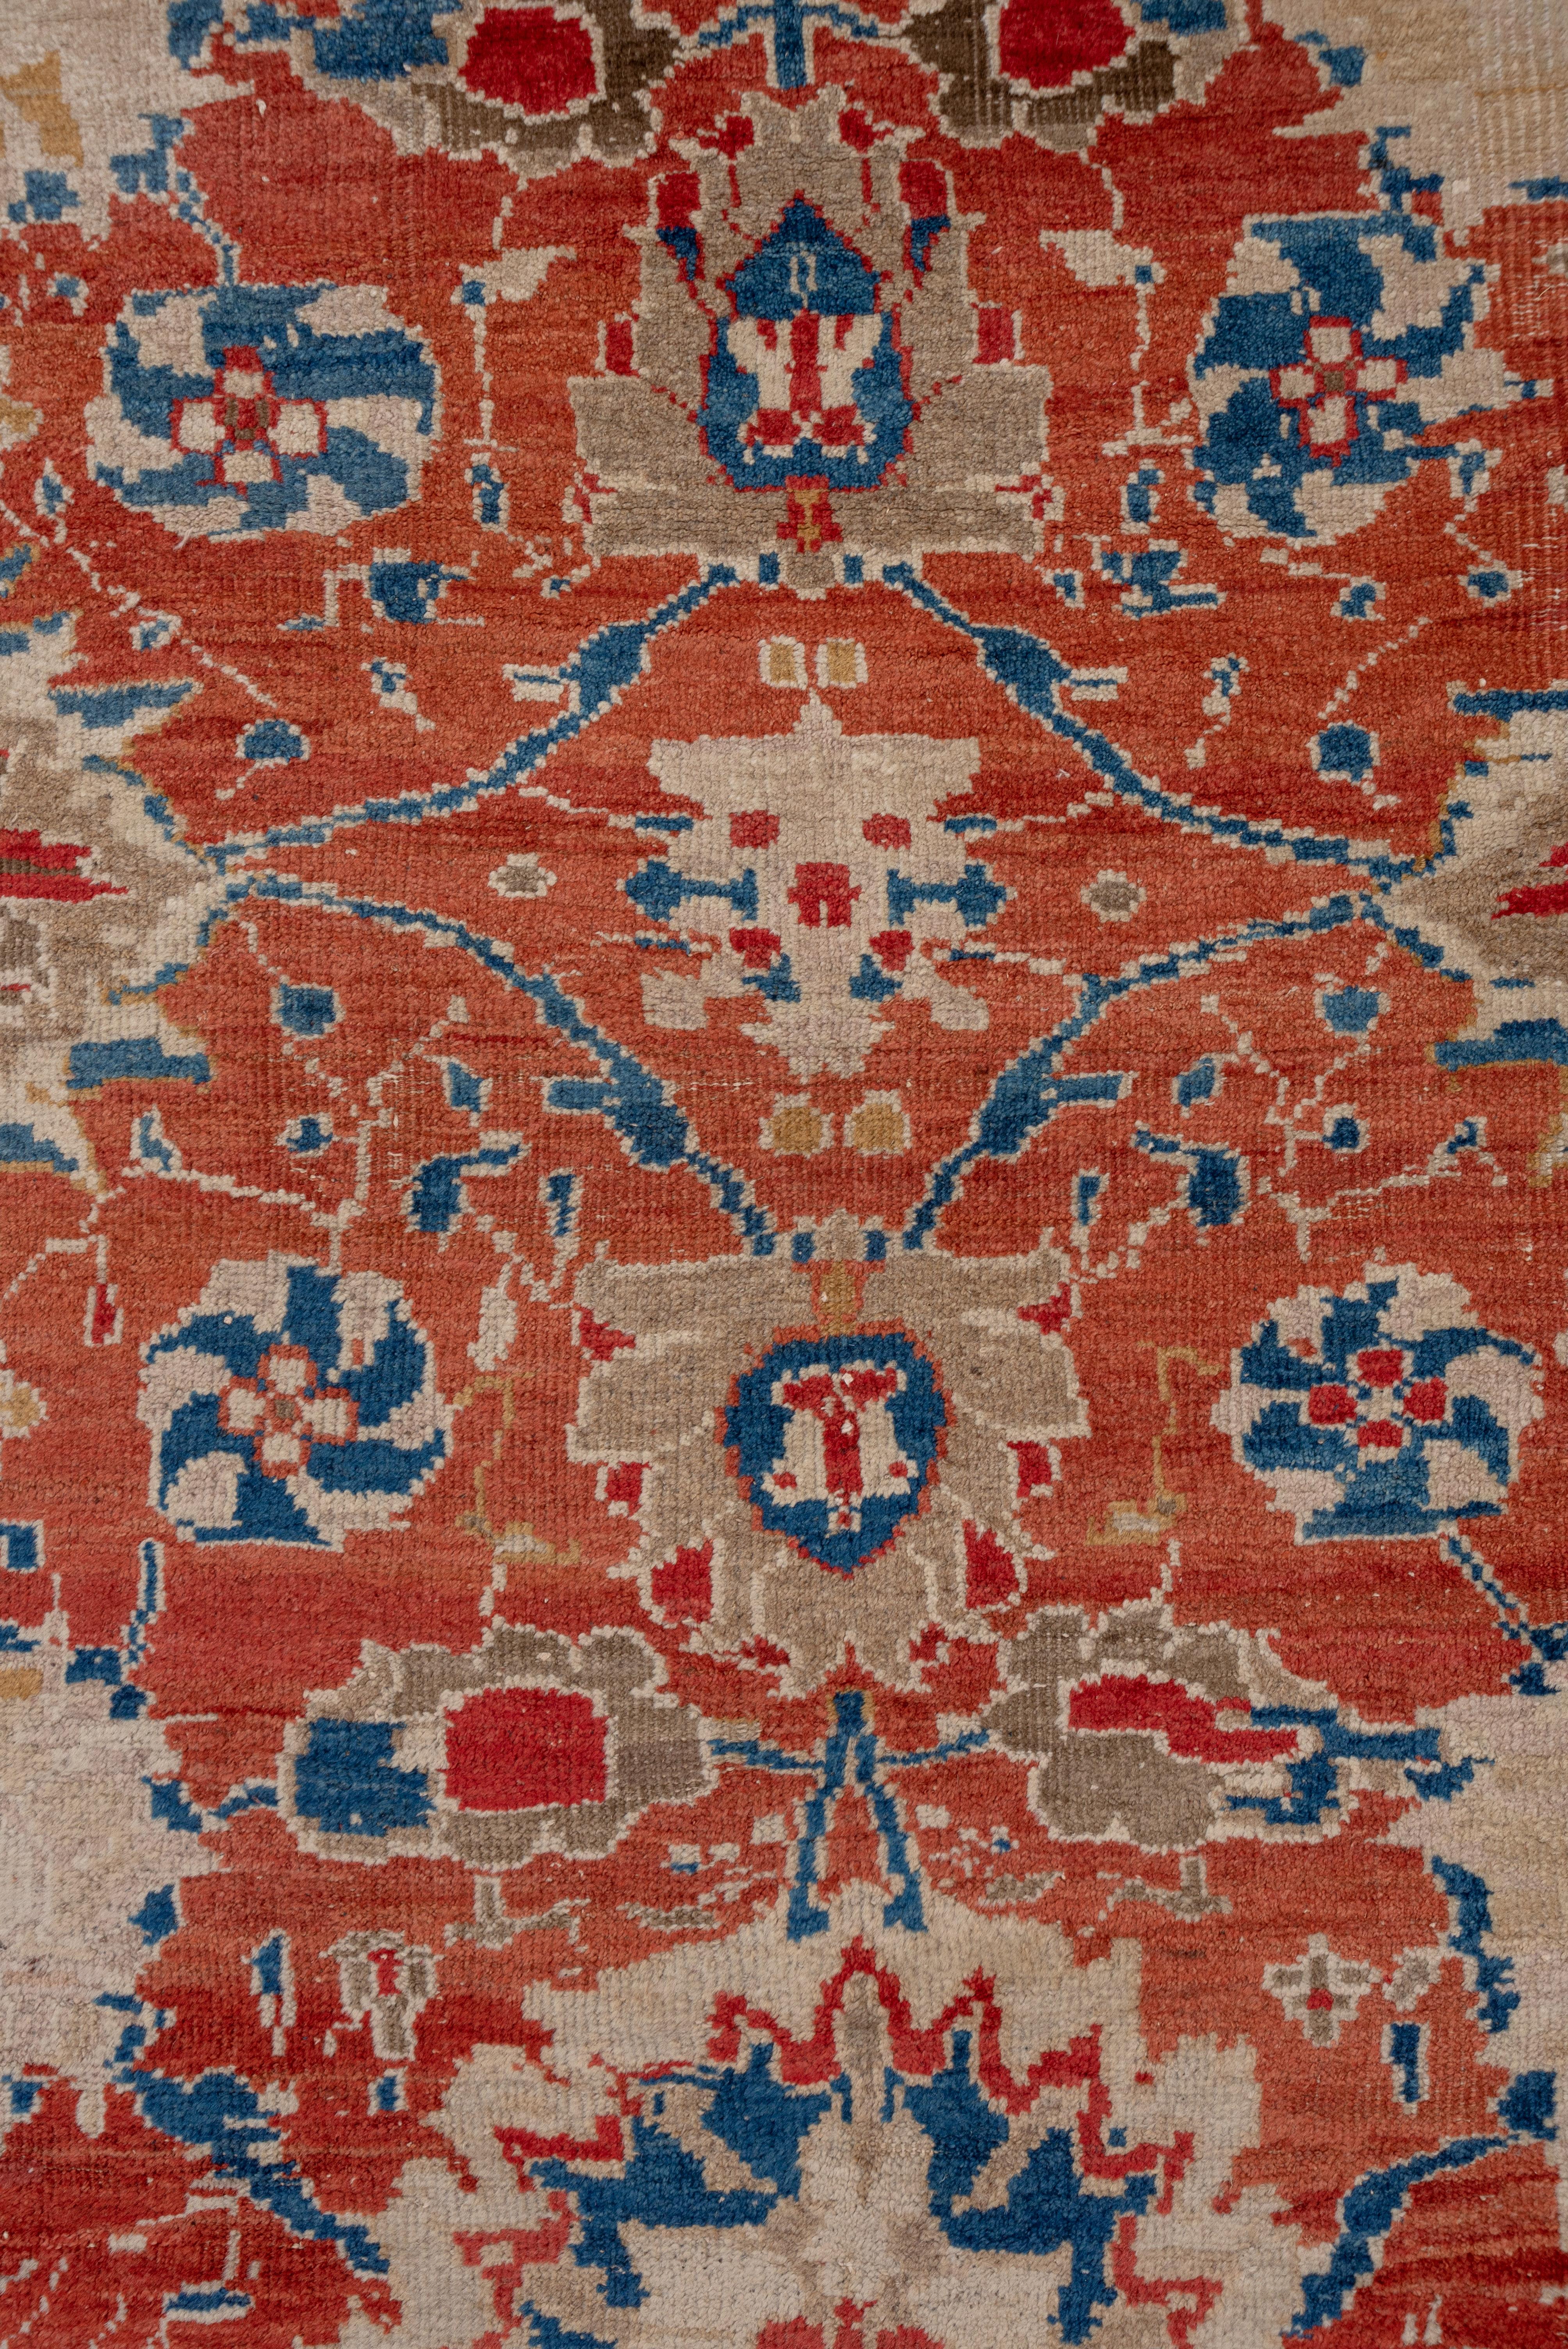 Magnificent Antique Persian Sultanabad Carpet, Bright Orange & Red Allover Field 5